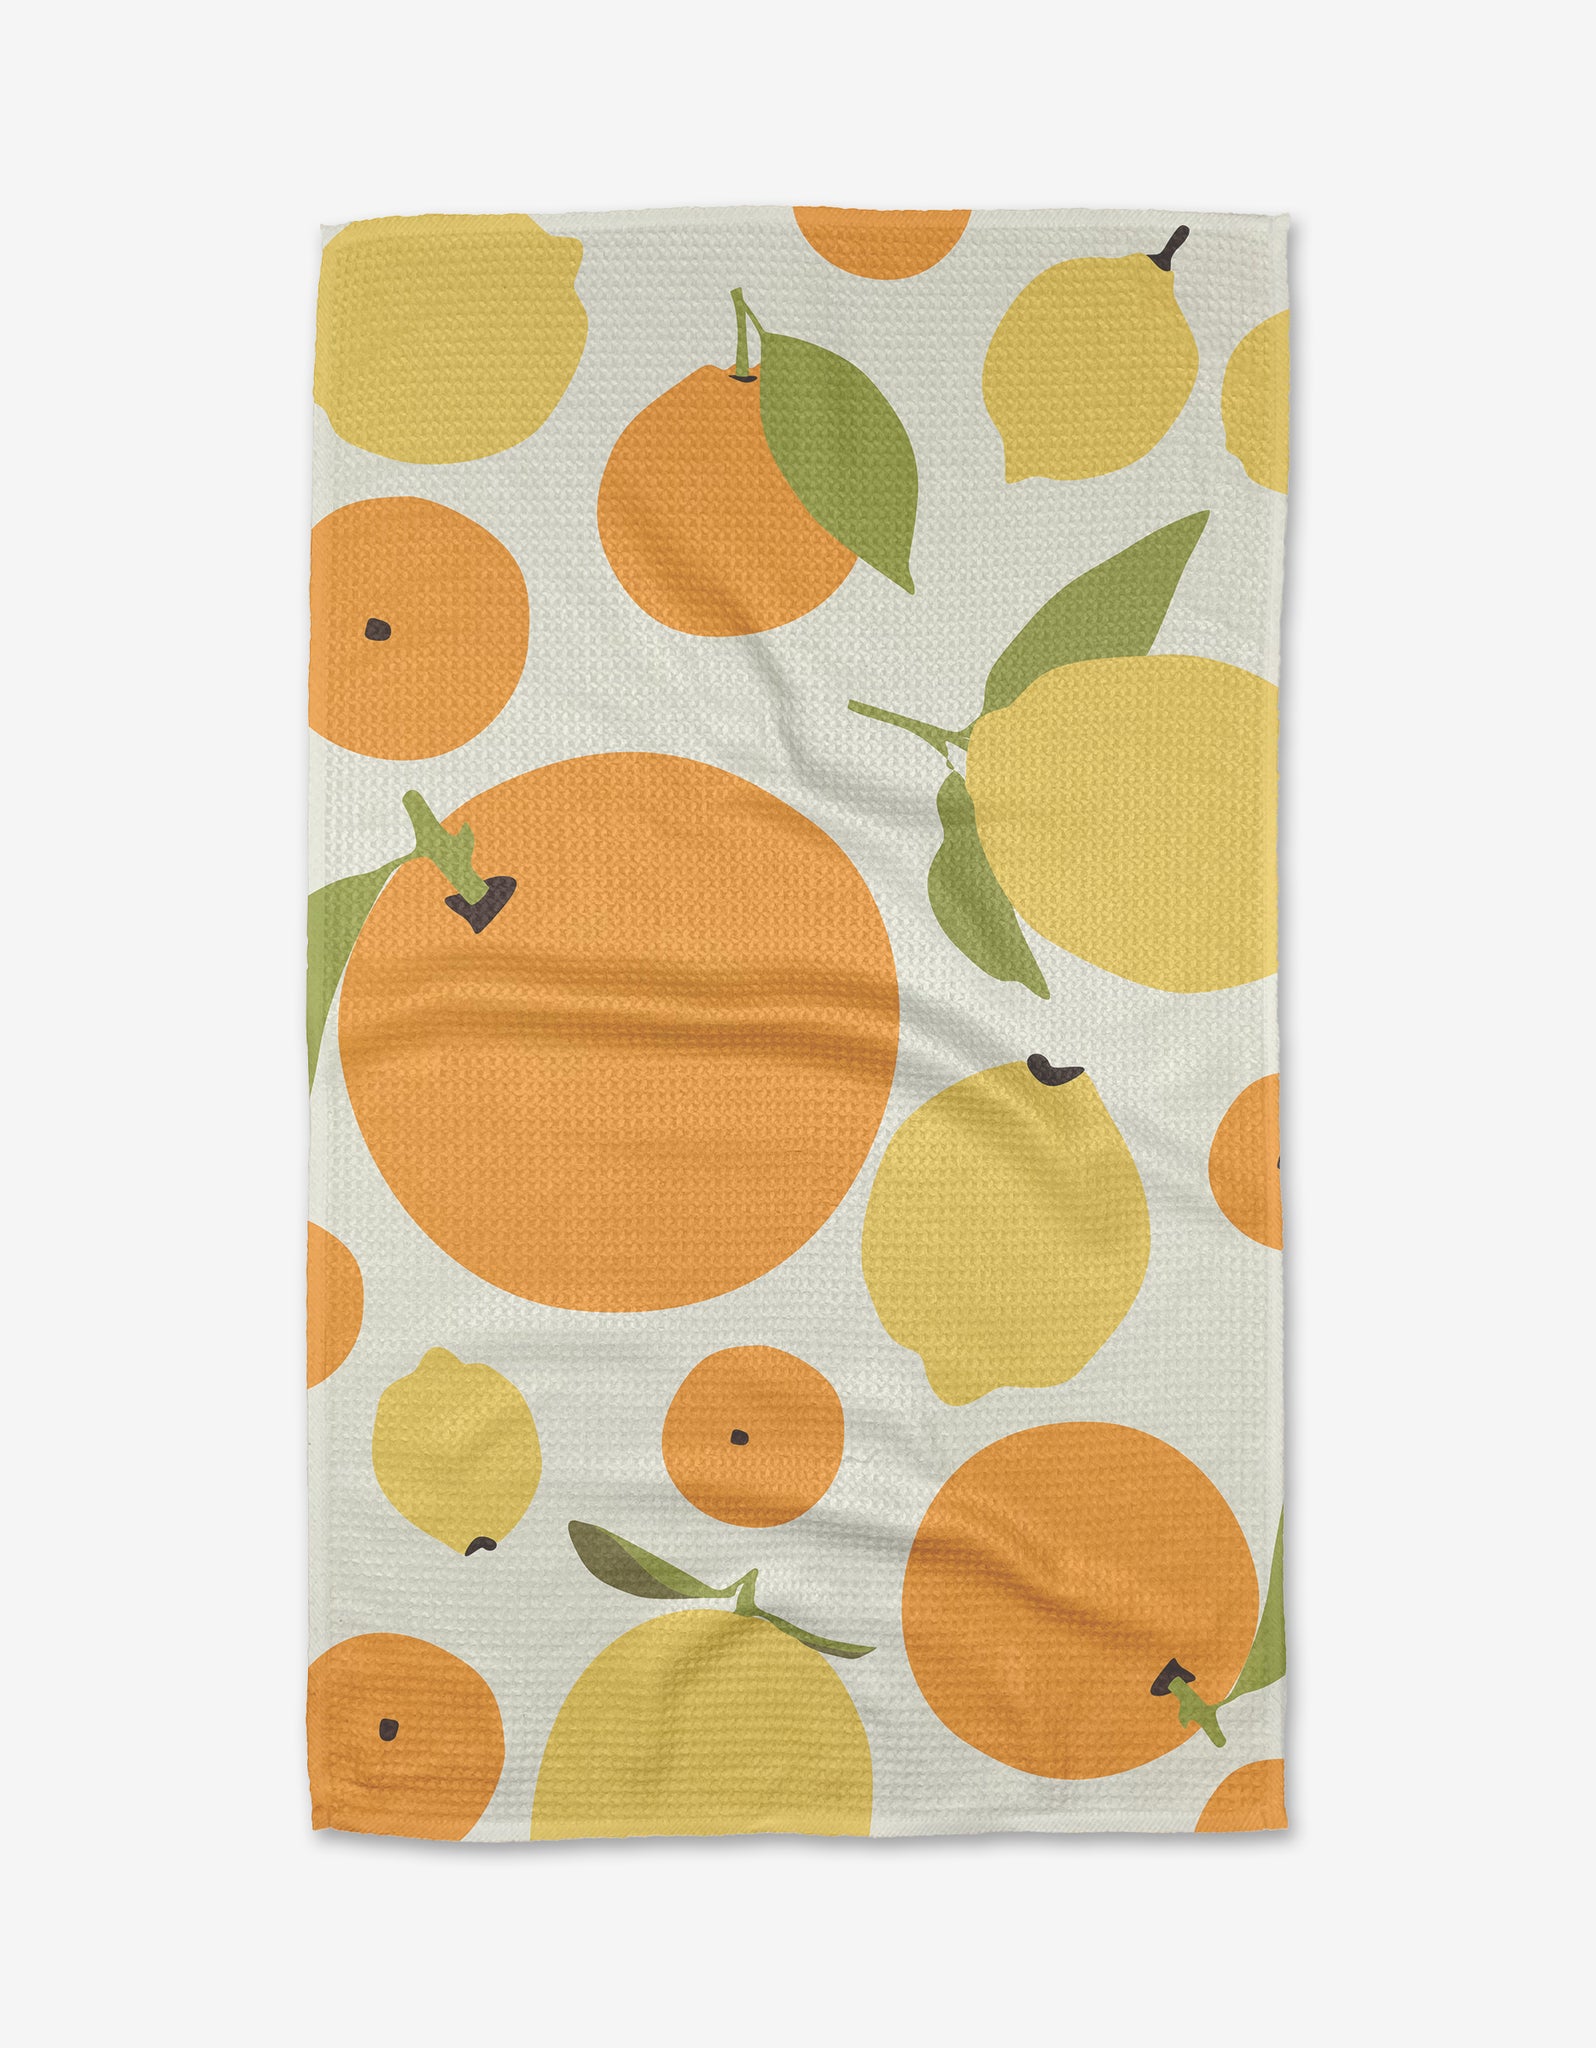 https://cdn.shopify.com/s/files/1/2923/5220/products/TT-MF-sunny-lemons-and-oranges.jpg?crop=center&height=2048&v=1654541669&width=2048